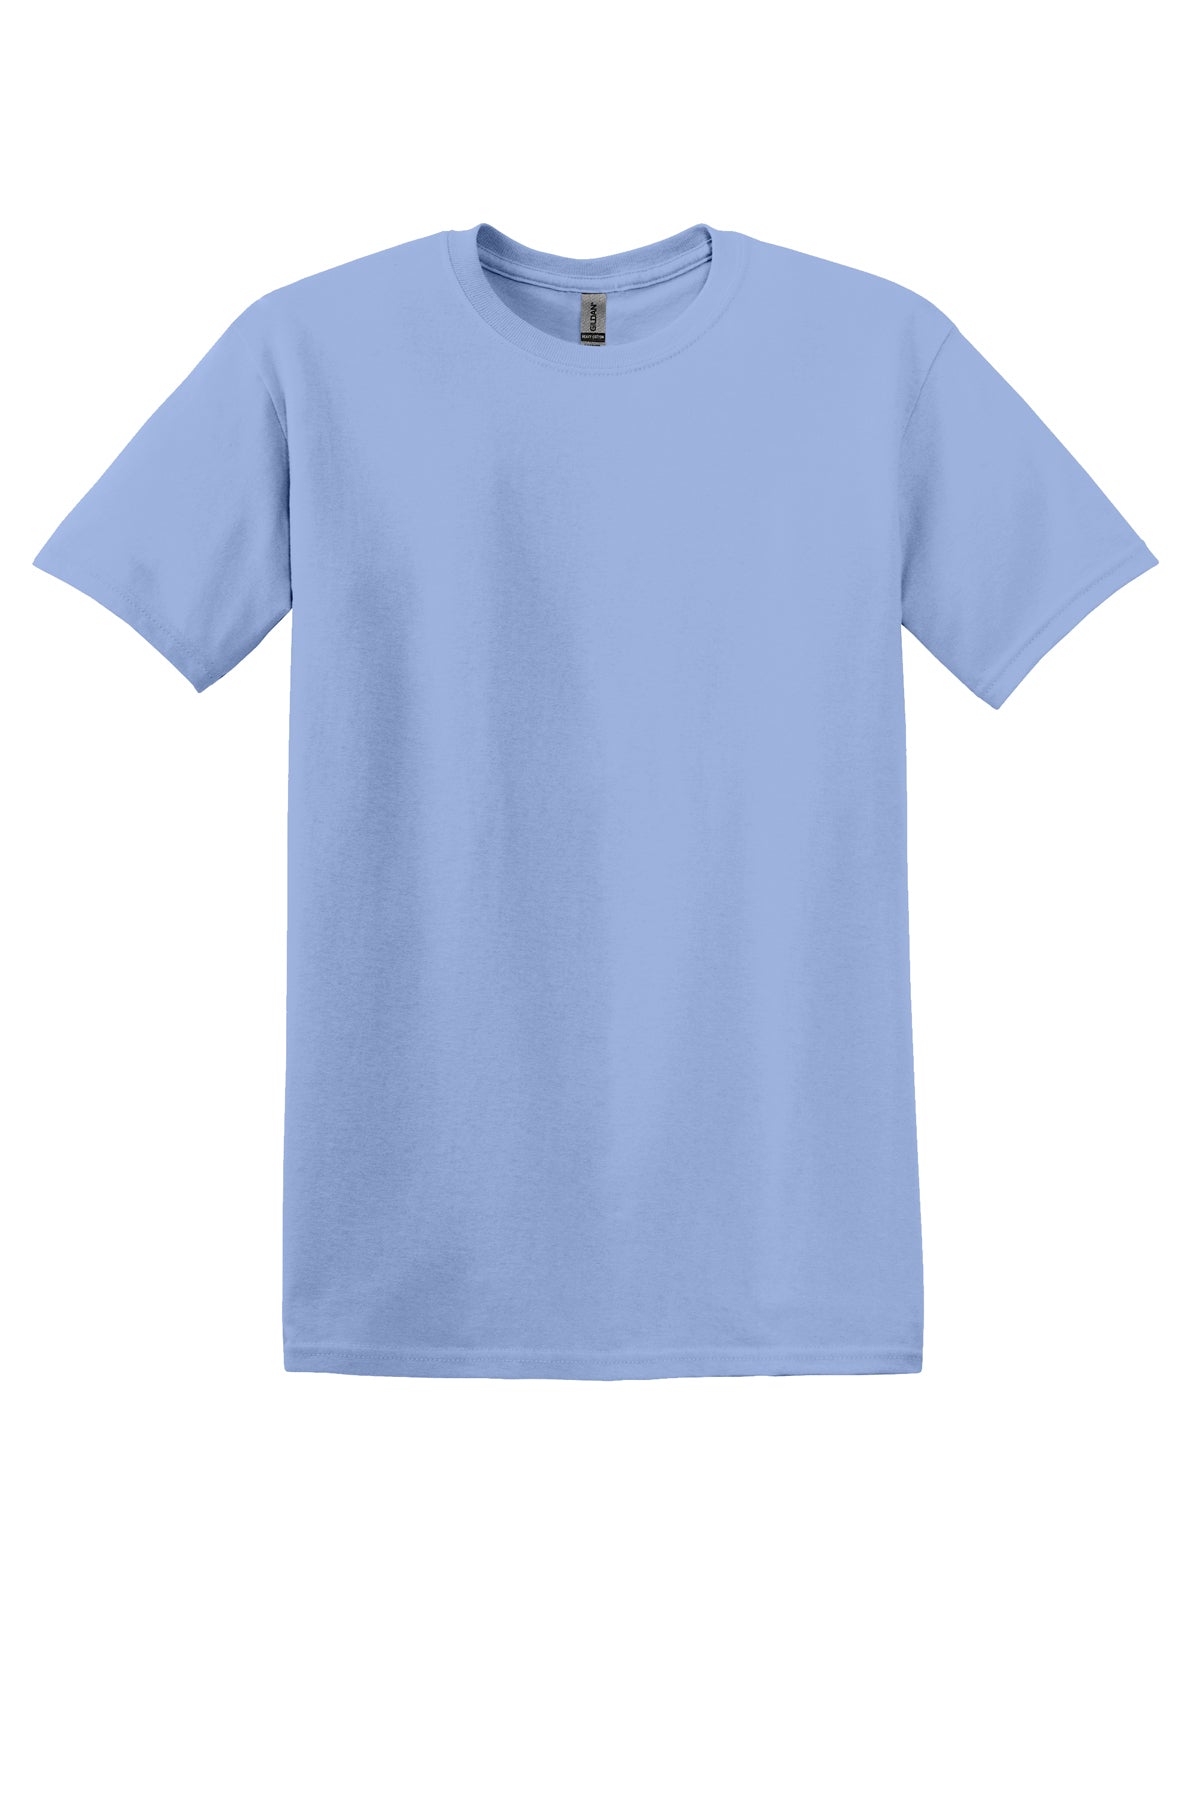 Gildan Mens/Unisex S/S Shirts Carolina Blue